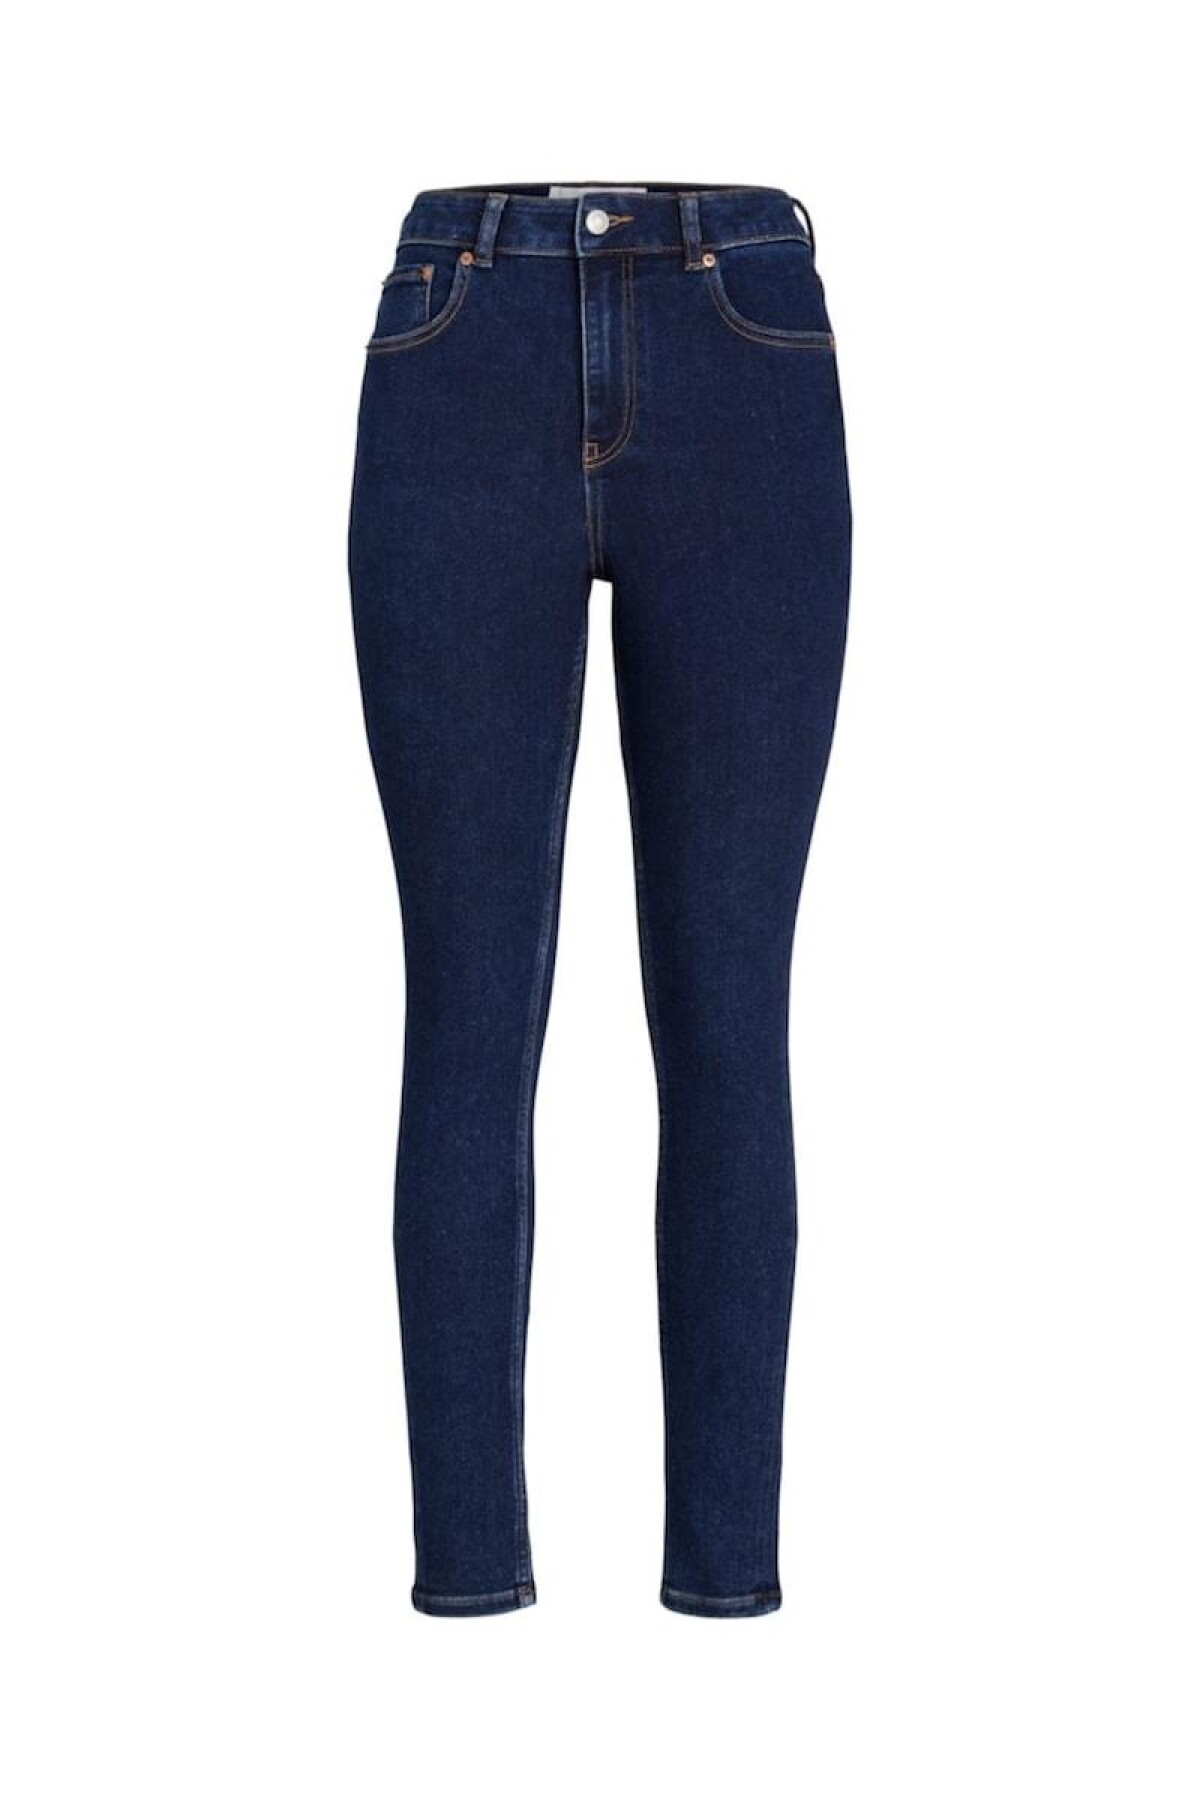 Jeans Vienna Skinny Fit Dark Blue Denim